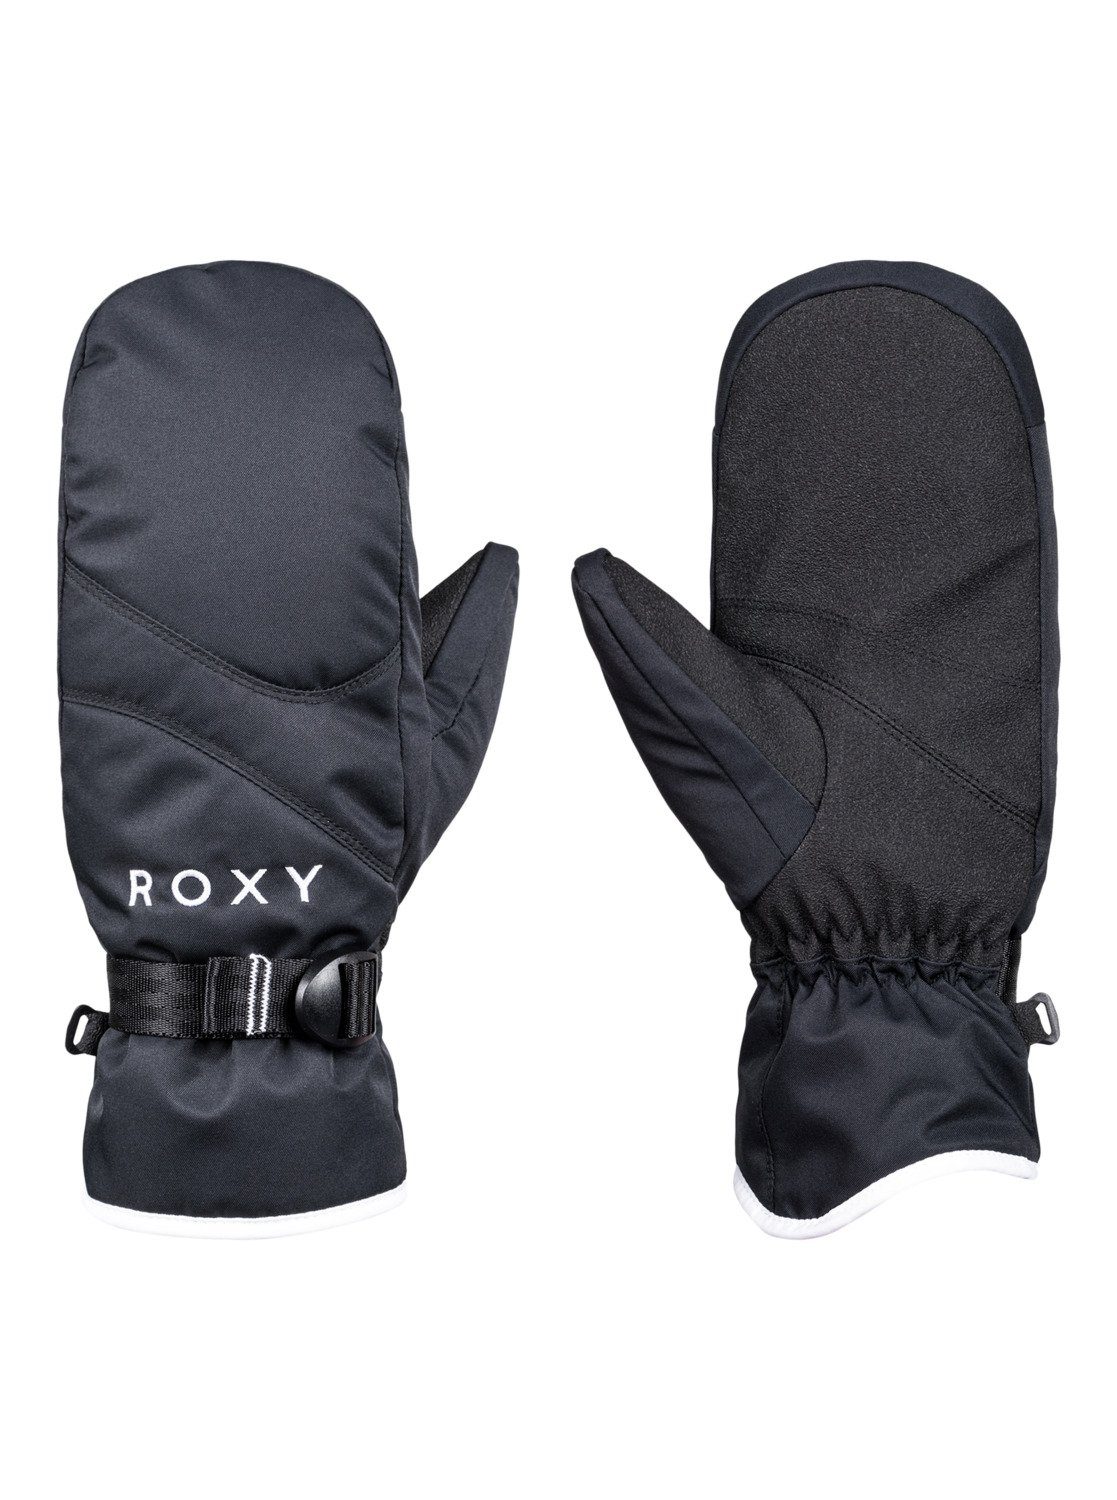 True ROXY Jetty Black Snowboardhandschuhe Roxy